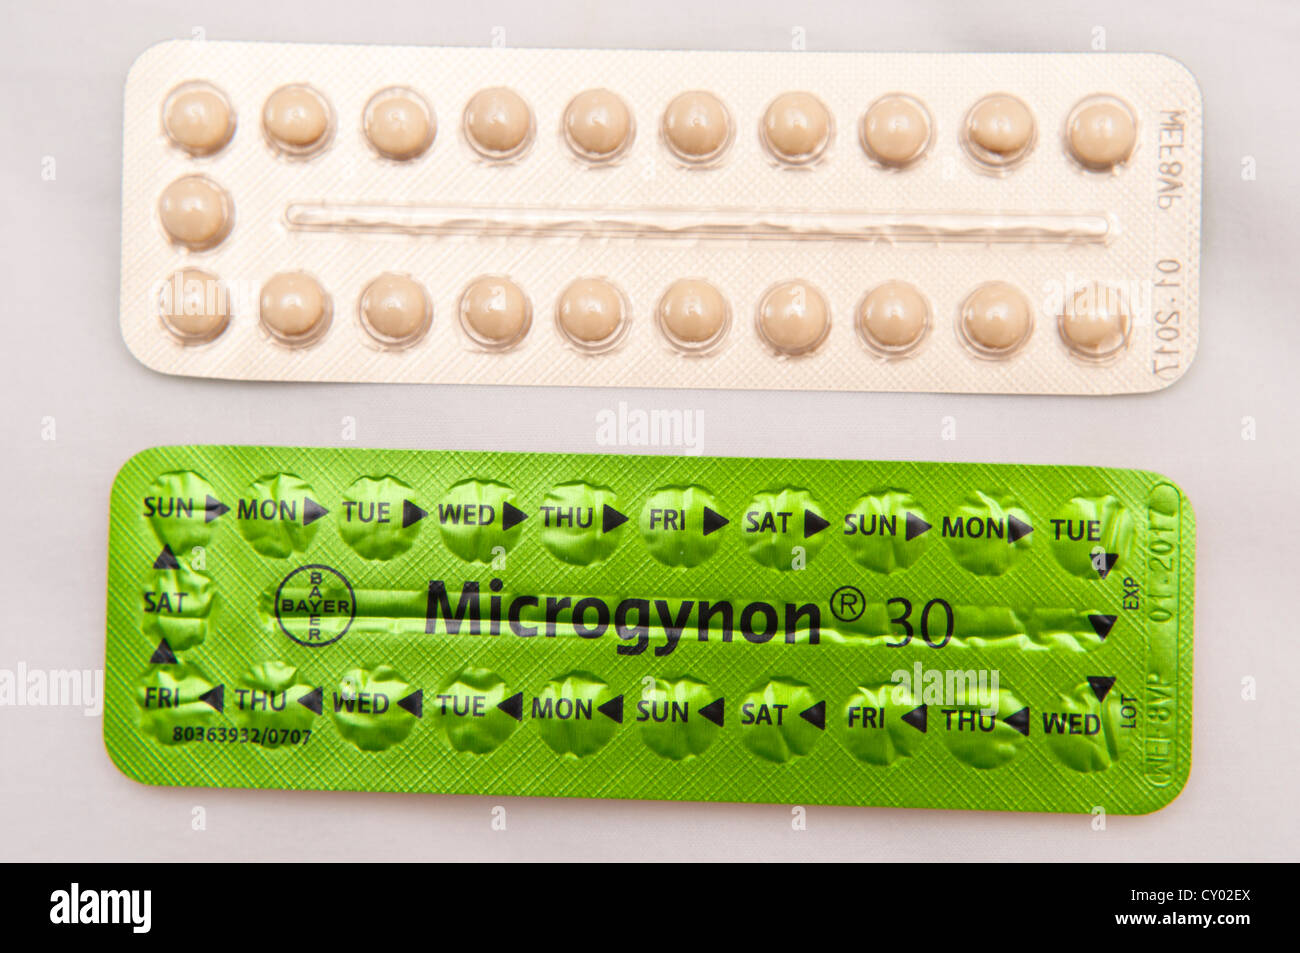 Microgynon pilule contraceptive Banque D'Images